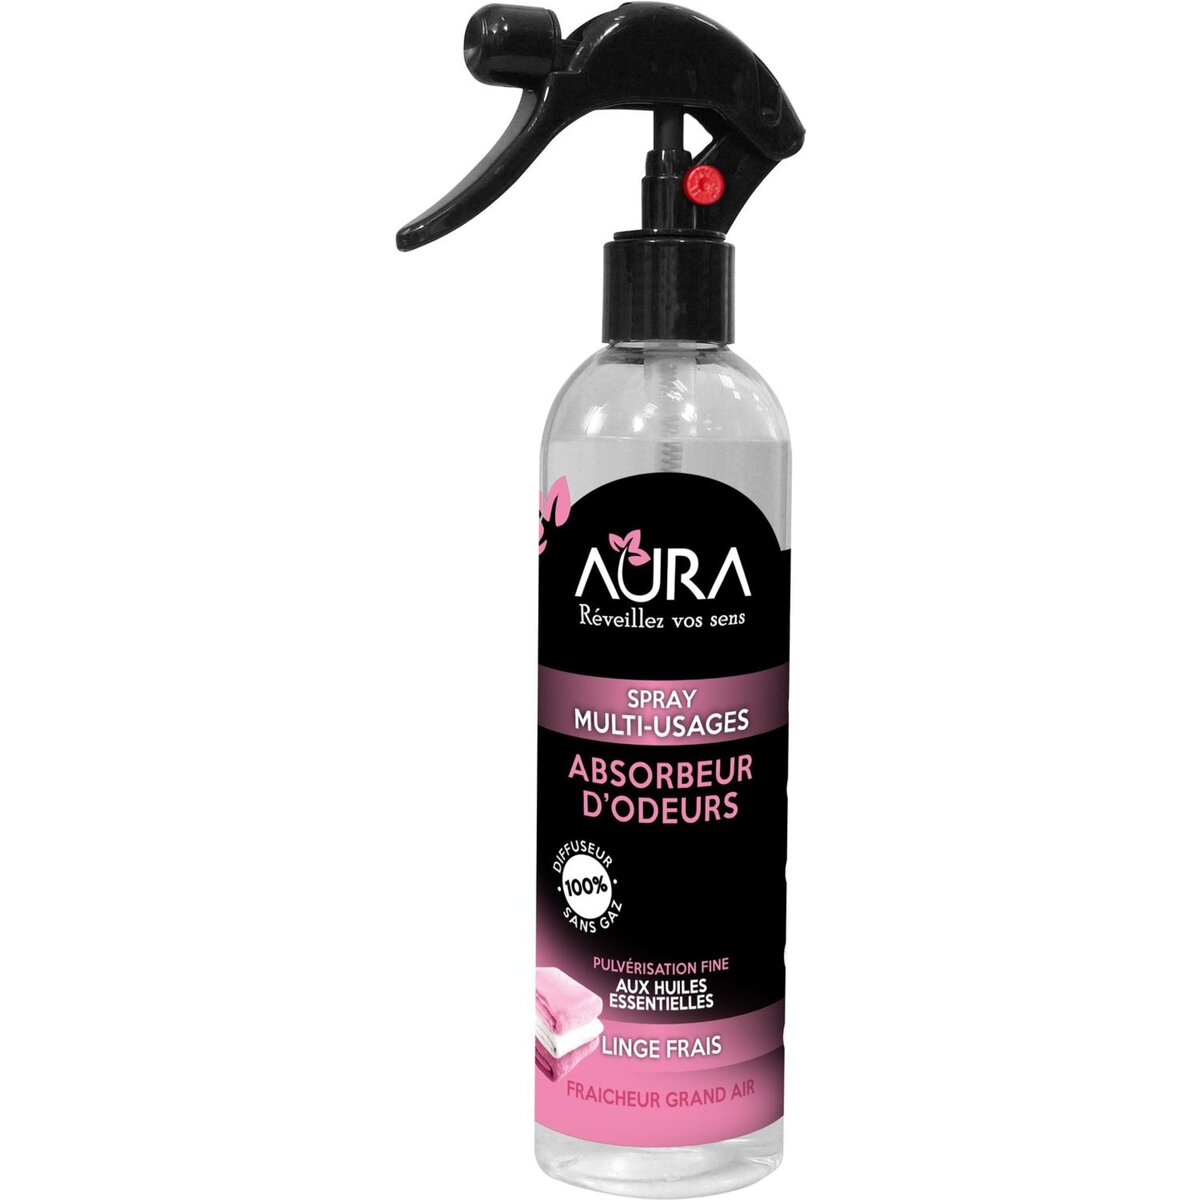 AURA Spray multi-usages absorbeur d'odeurs linge frais 280ml